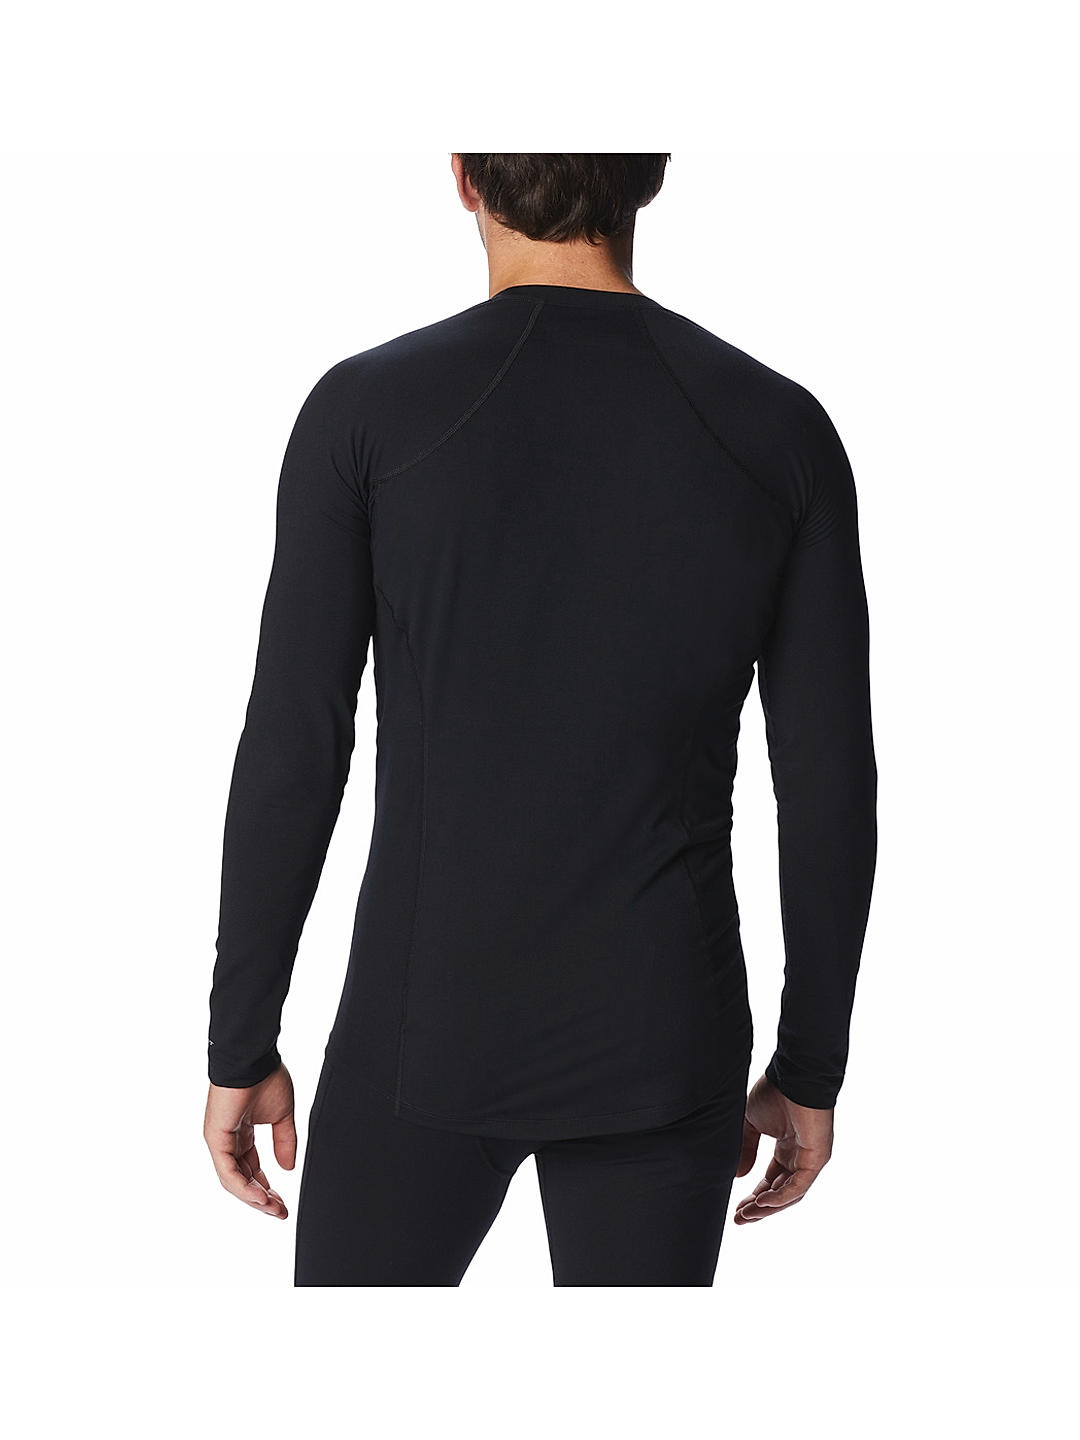 Long-sleeved thermal shirt in black